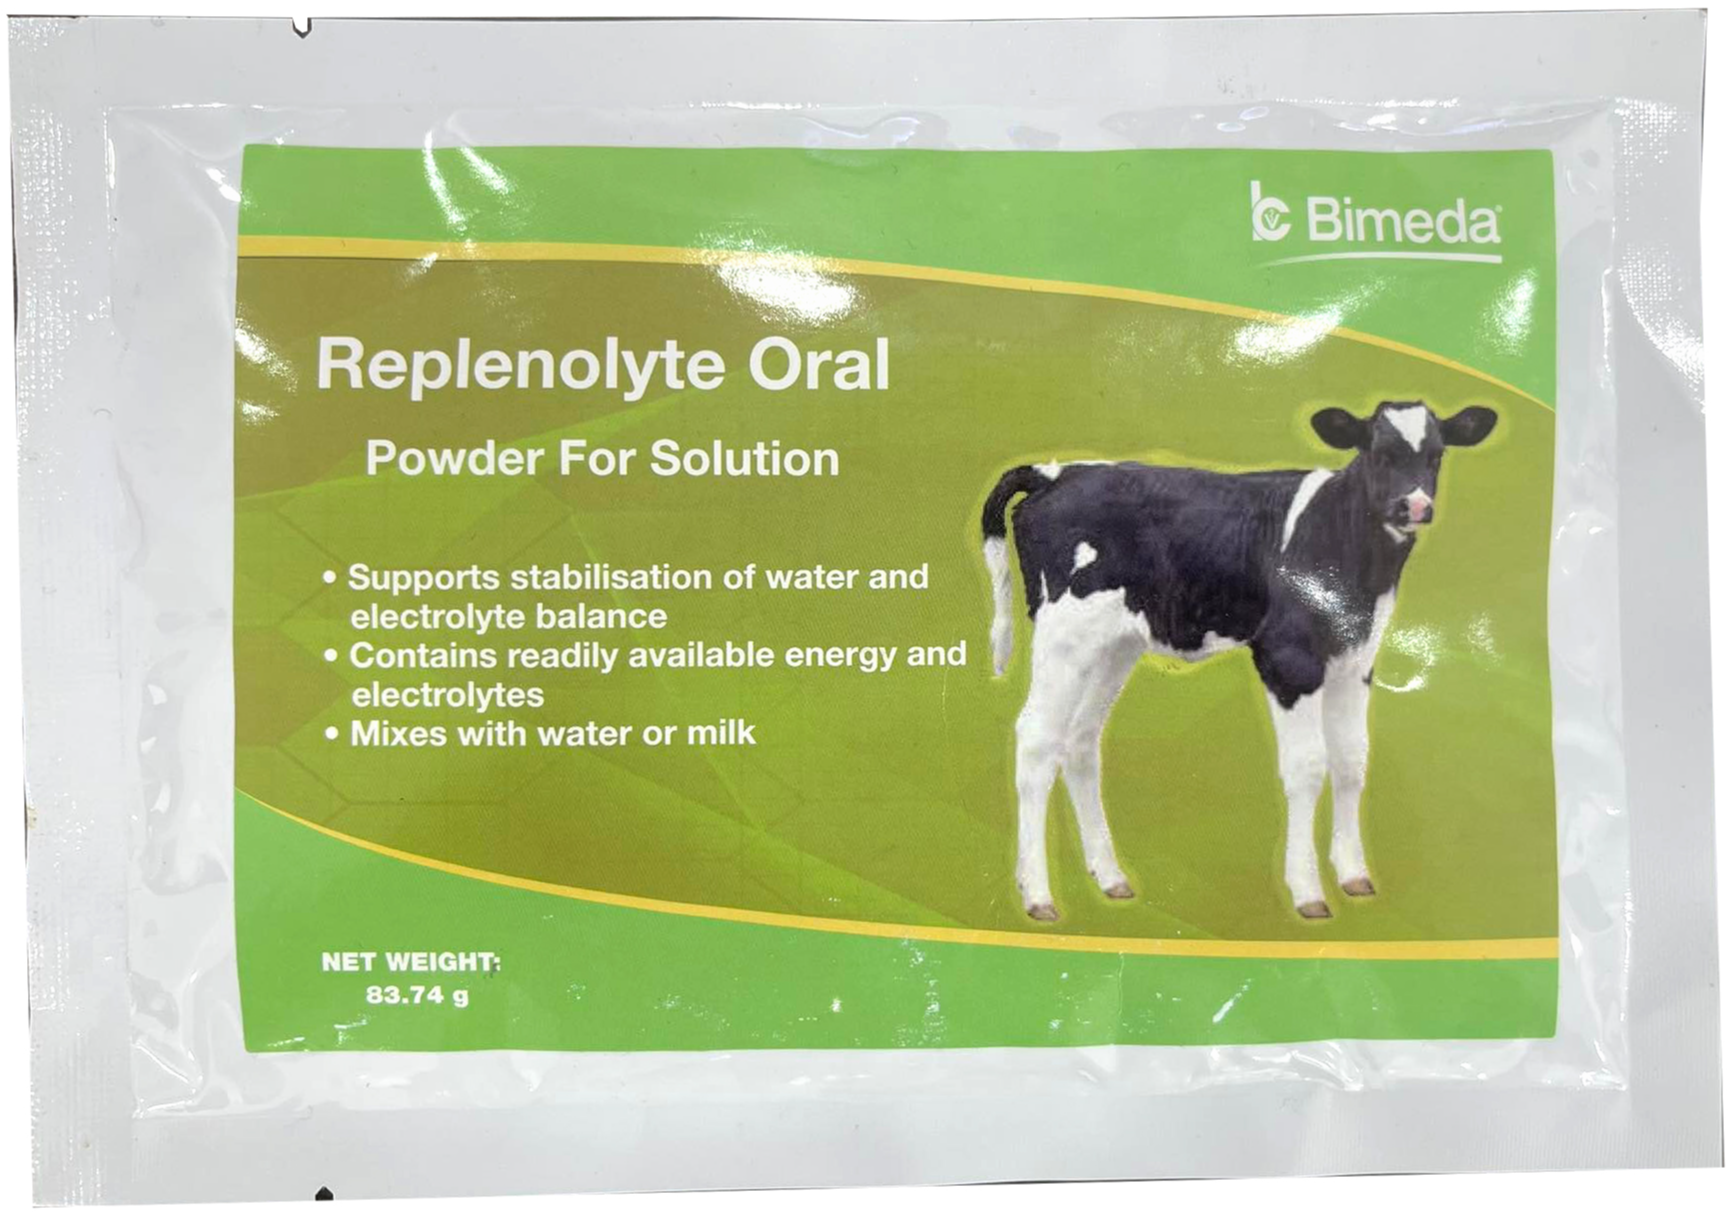 Replenolyte oral paste